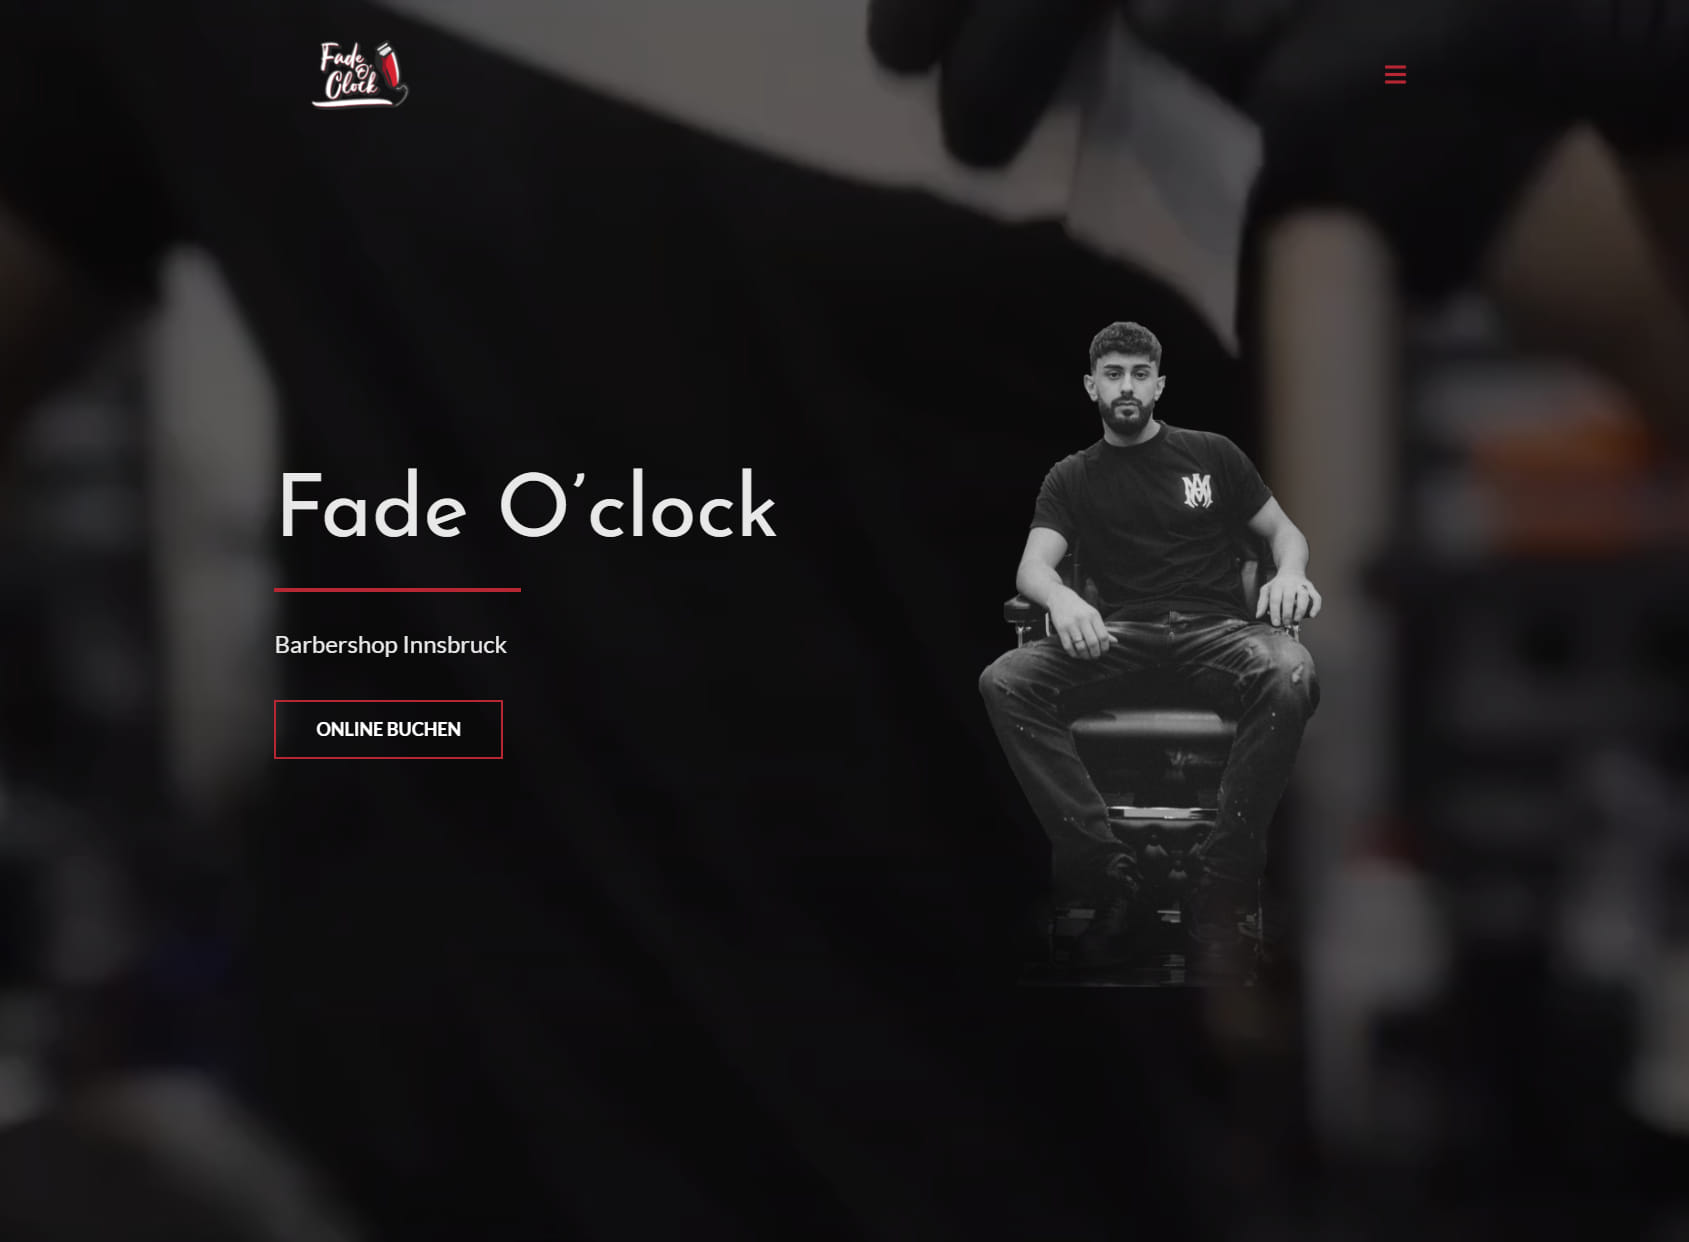 Fade O'clock - Barbershop Innsbruck